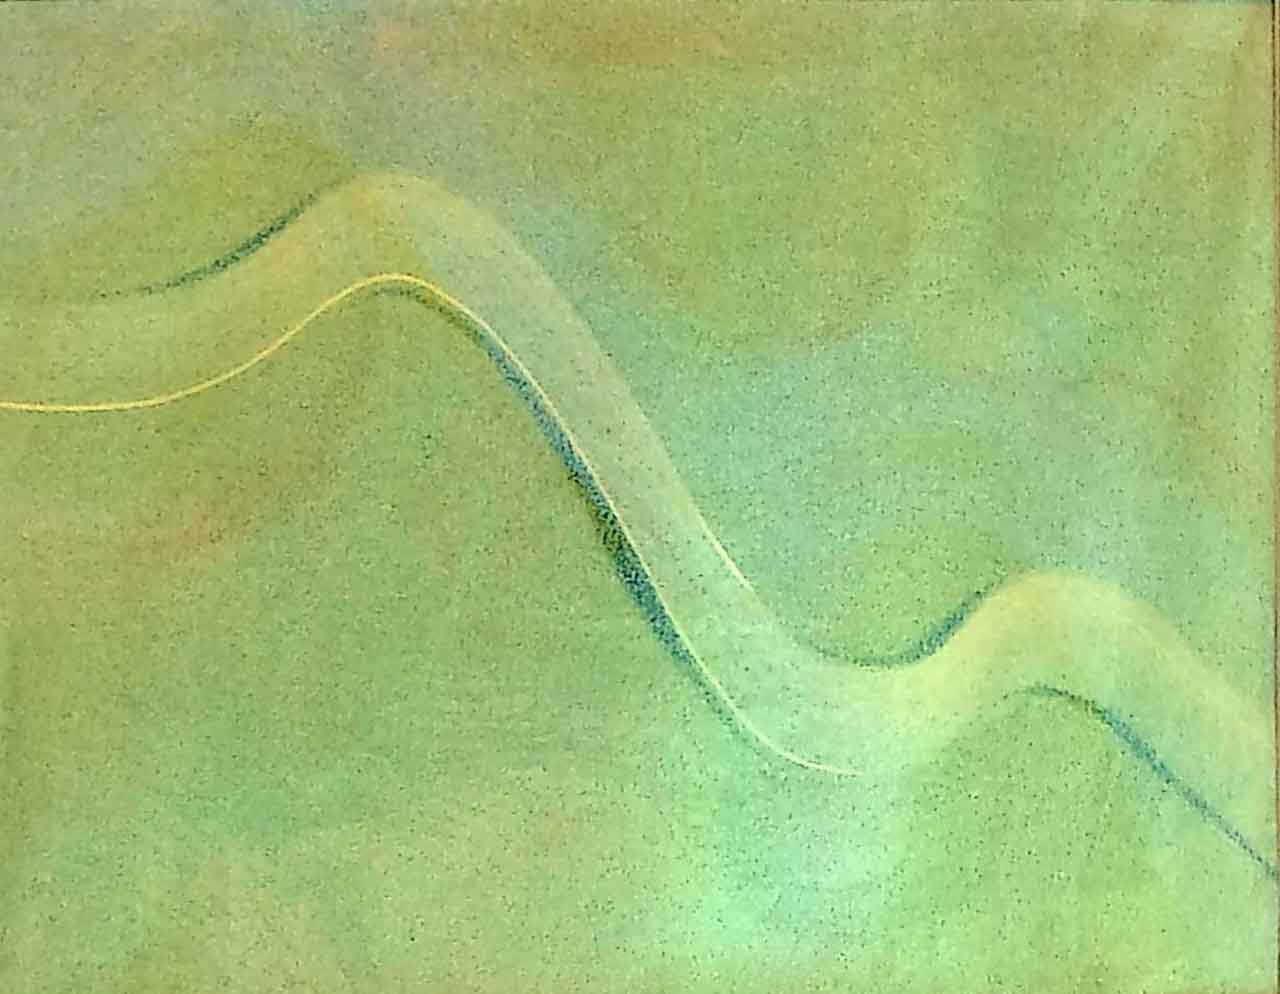 a print of swirled colors